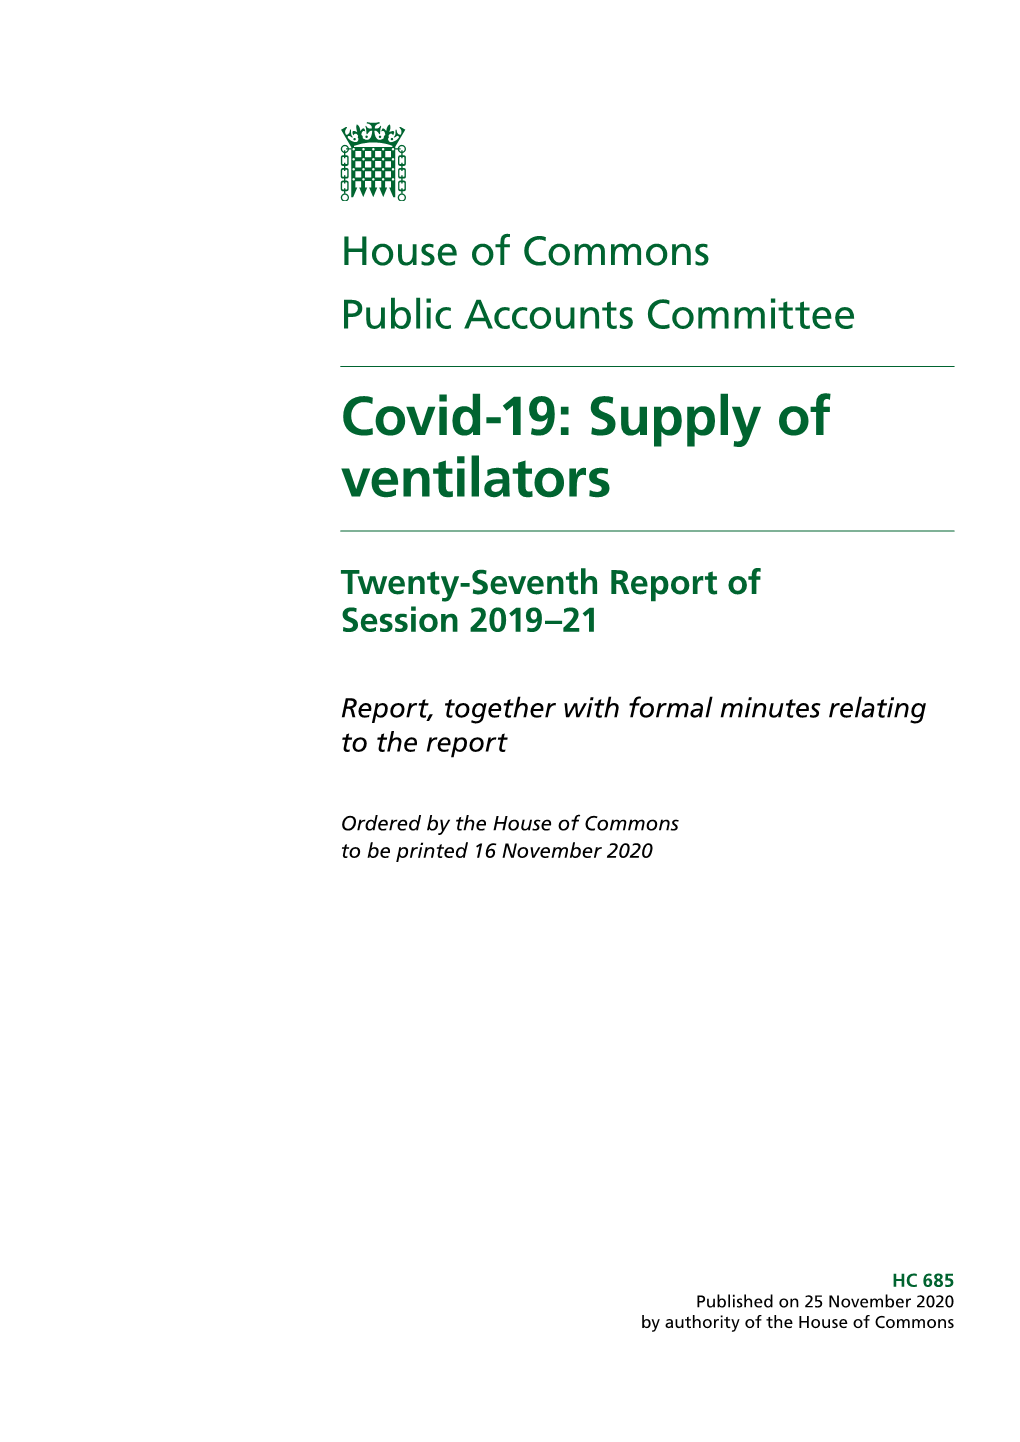 Covid-19: Supply of Ventilators